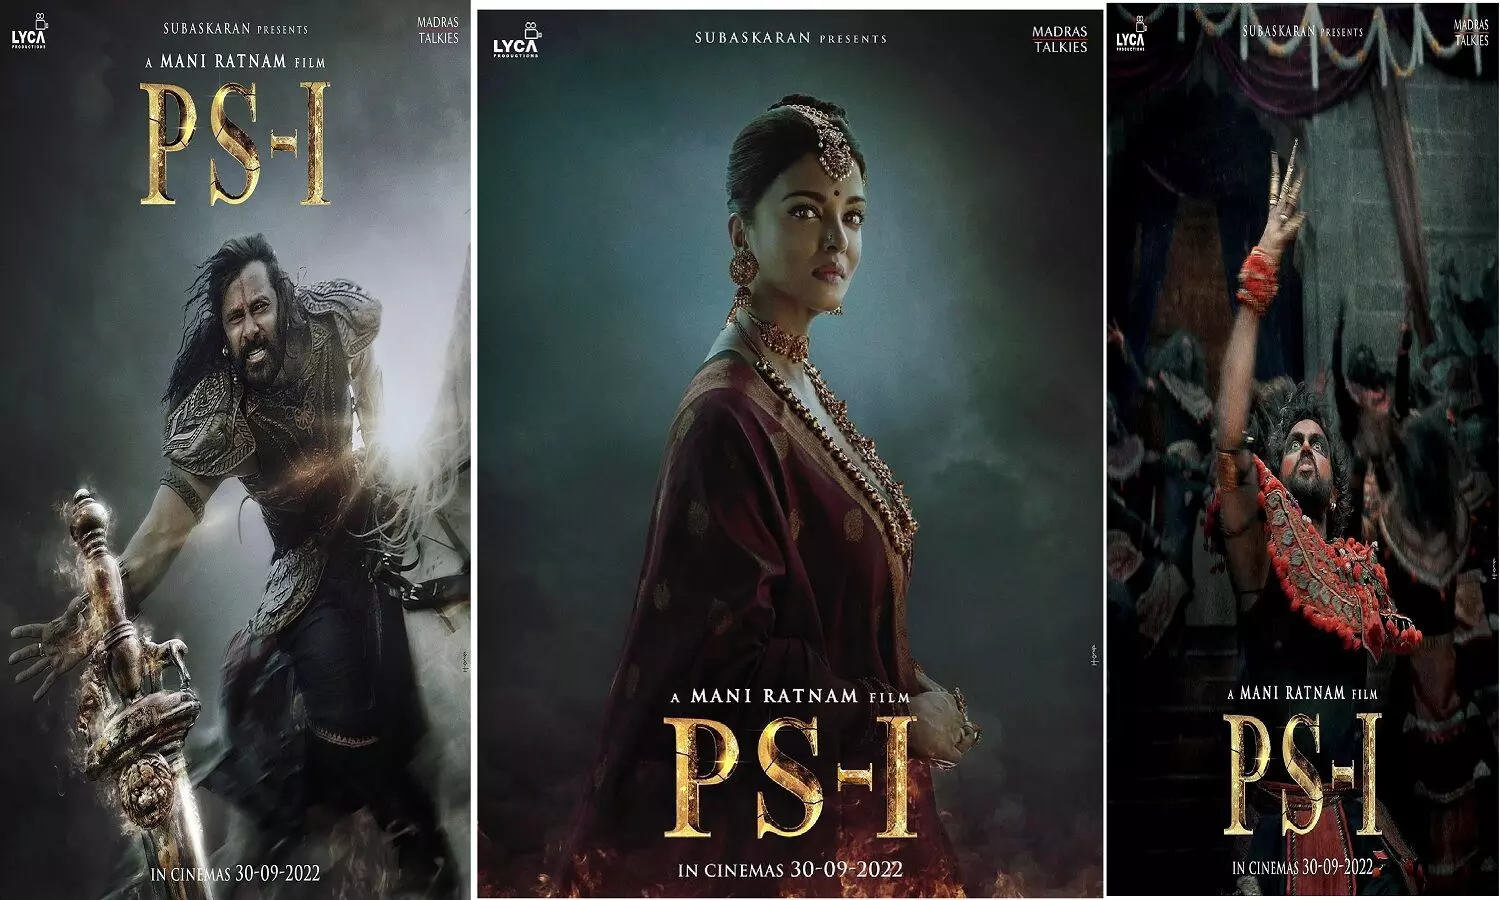 PS 1 Teaser Hindi: पोन्नियिन सेलवन का टीजर आउट! 500 करोड़ के बजट में बनी है फिल्म | PS 1 Teaser Hindi:Ponniyin Selvan teaser out! The film is made in the budget of 500 crores